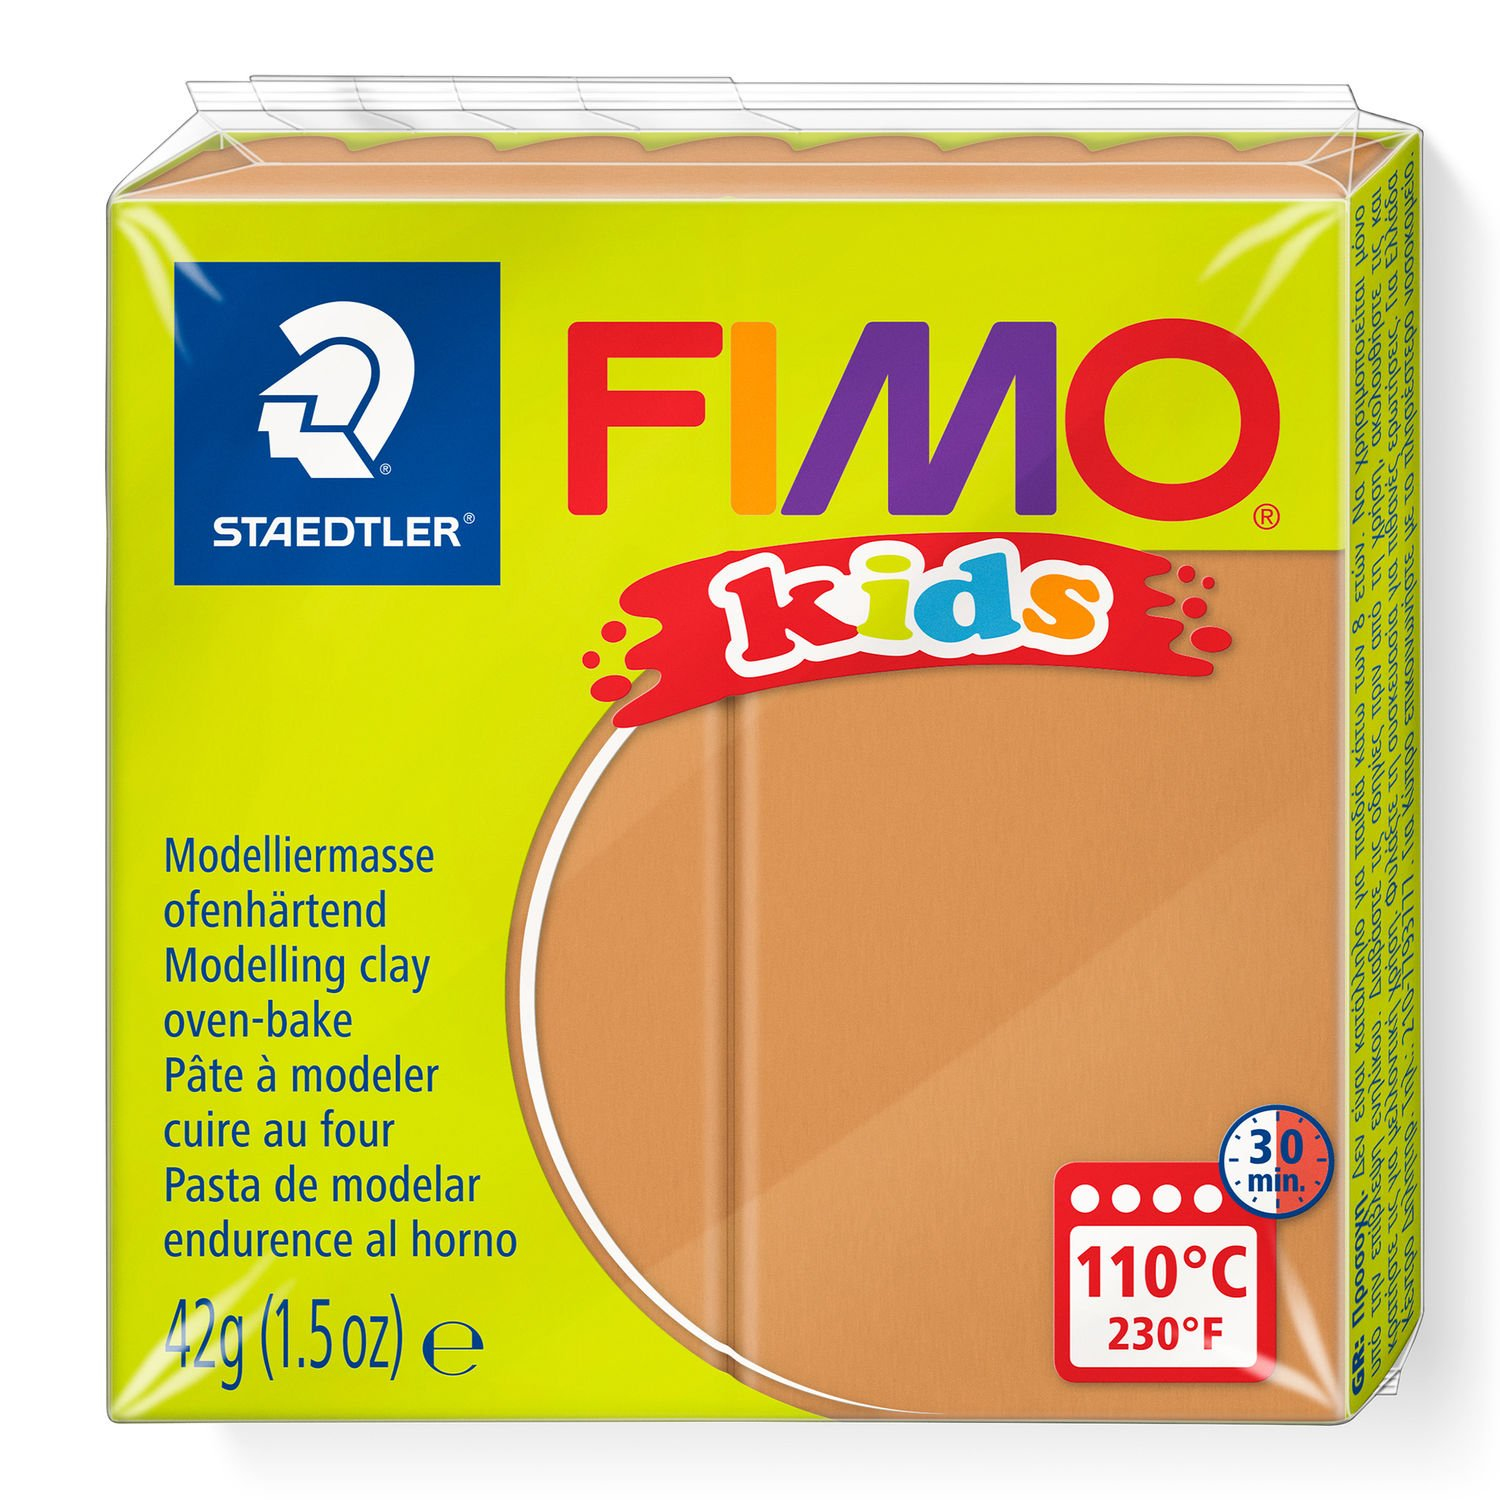 STAEDTLER FIMO 8030 - Knetmasse - Braun - Kinder - 1 Stück(e) - Light brown - 1 Farben